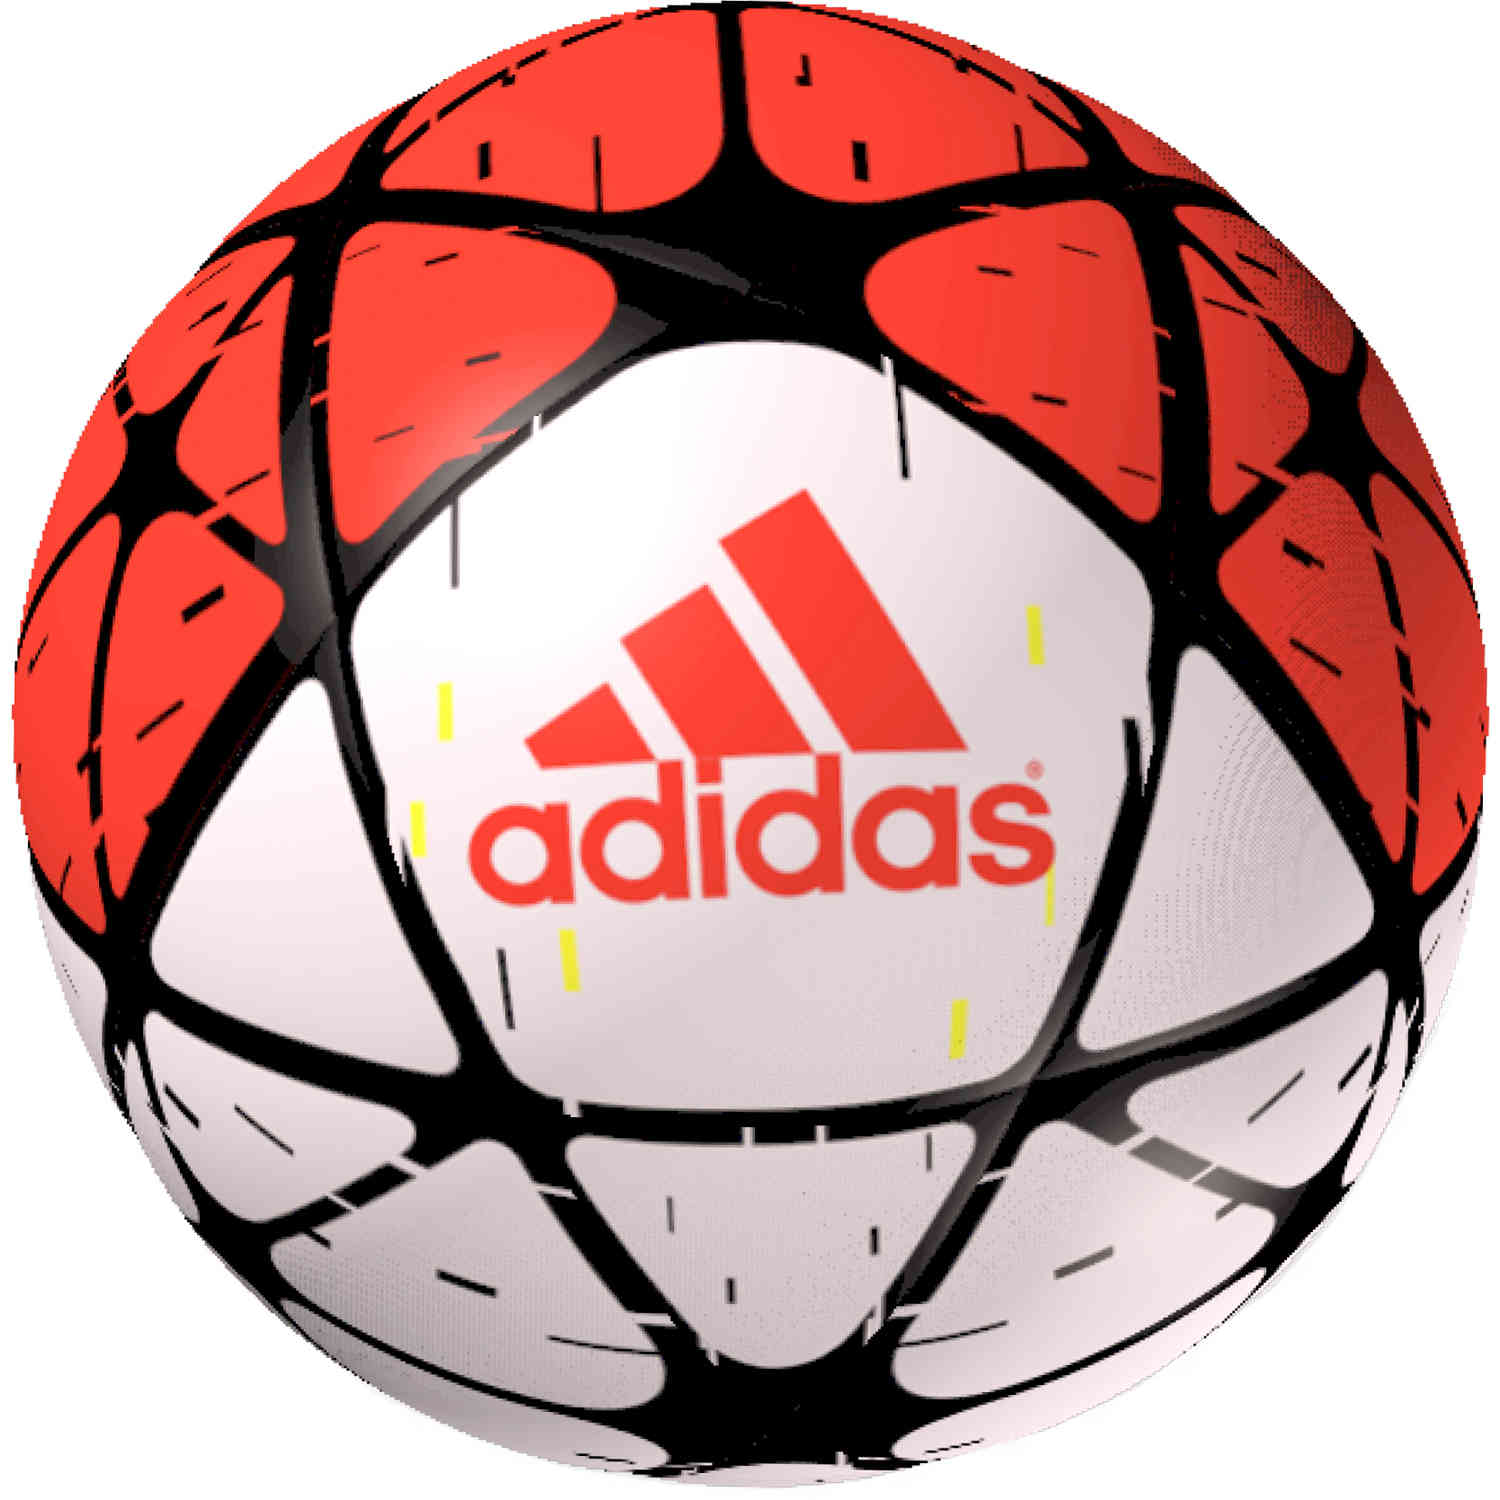 adidas glider ii soccer ball